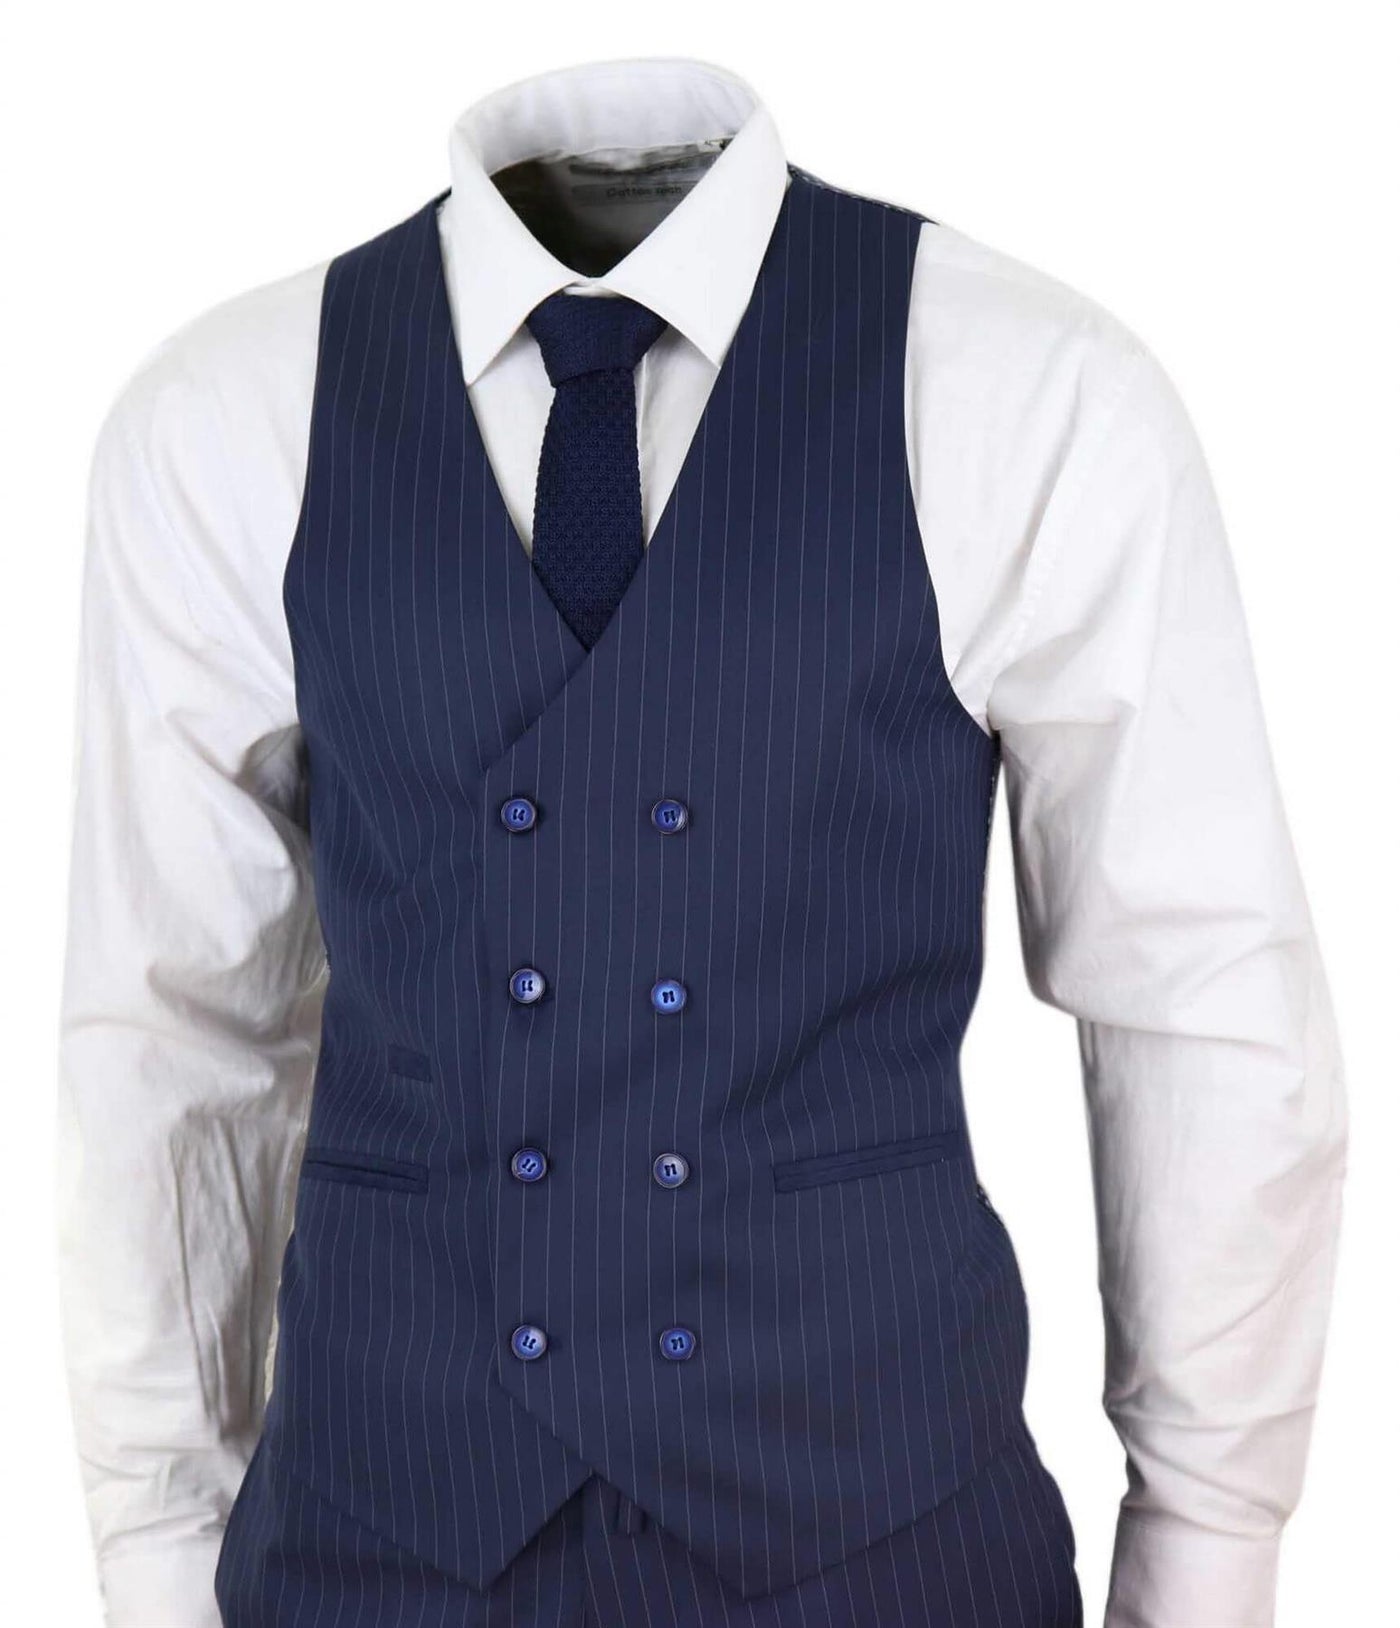 Men's 3 Piece Navy Blue Pinstripe Retro Suit